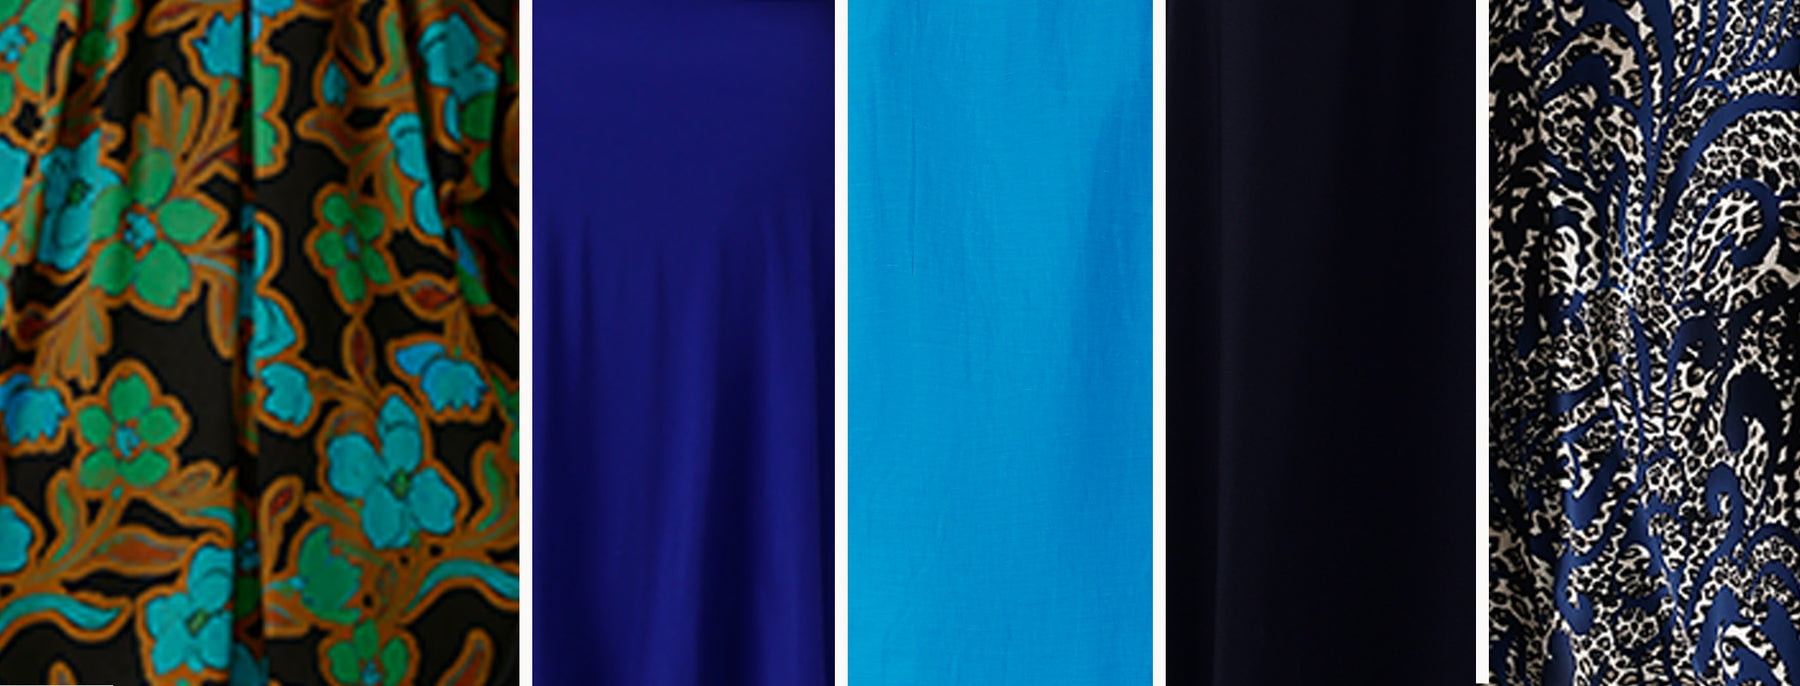 Colour colour which colour do you want? 😉 #FitInAbit #Dermawear